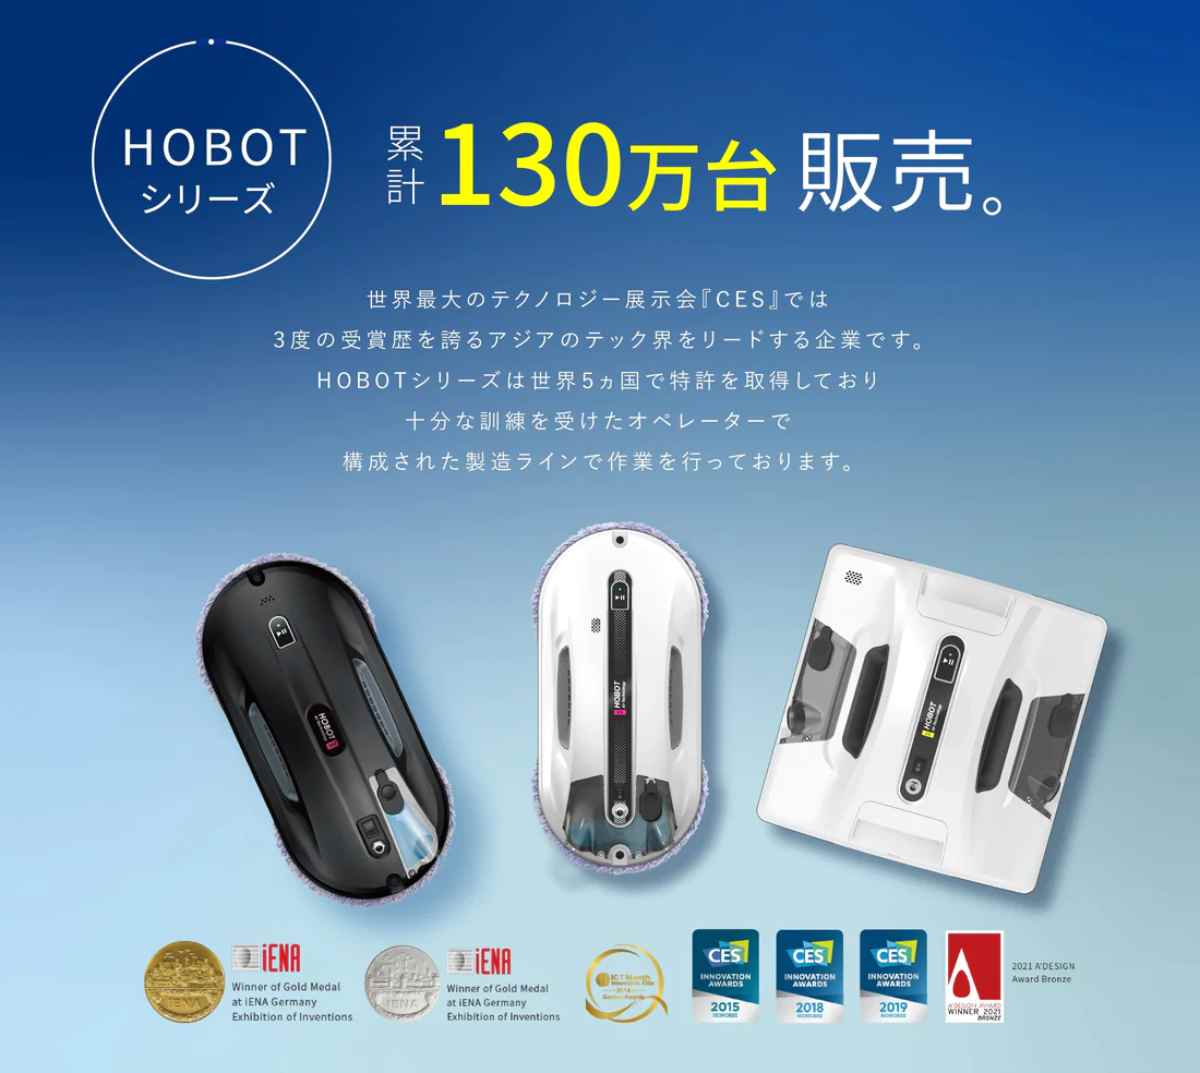 HOBOT 窓掃除ロボット HOBOT-R3 295×148×95mm ホワイト